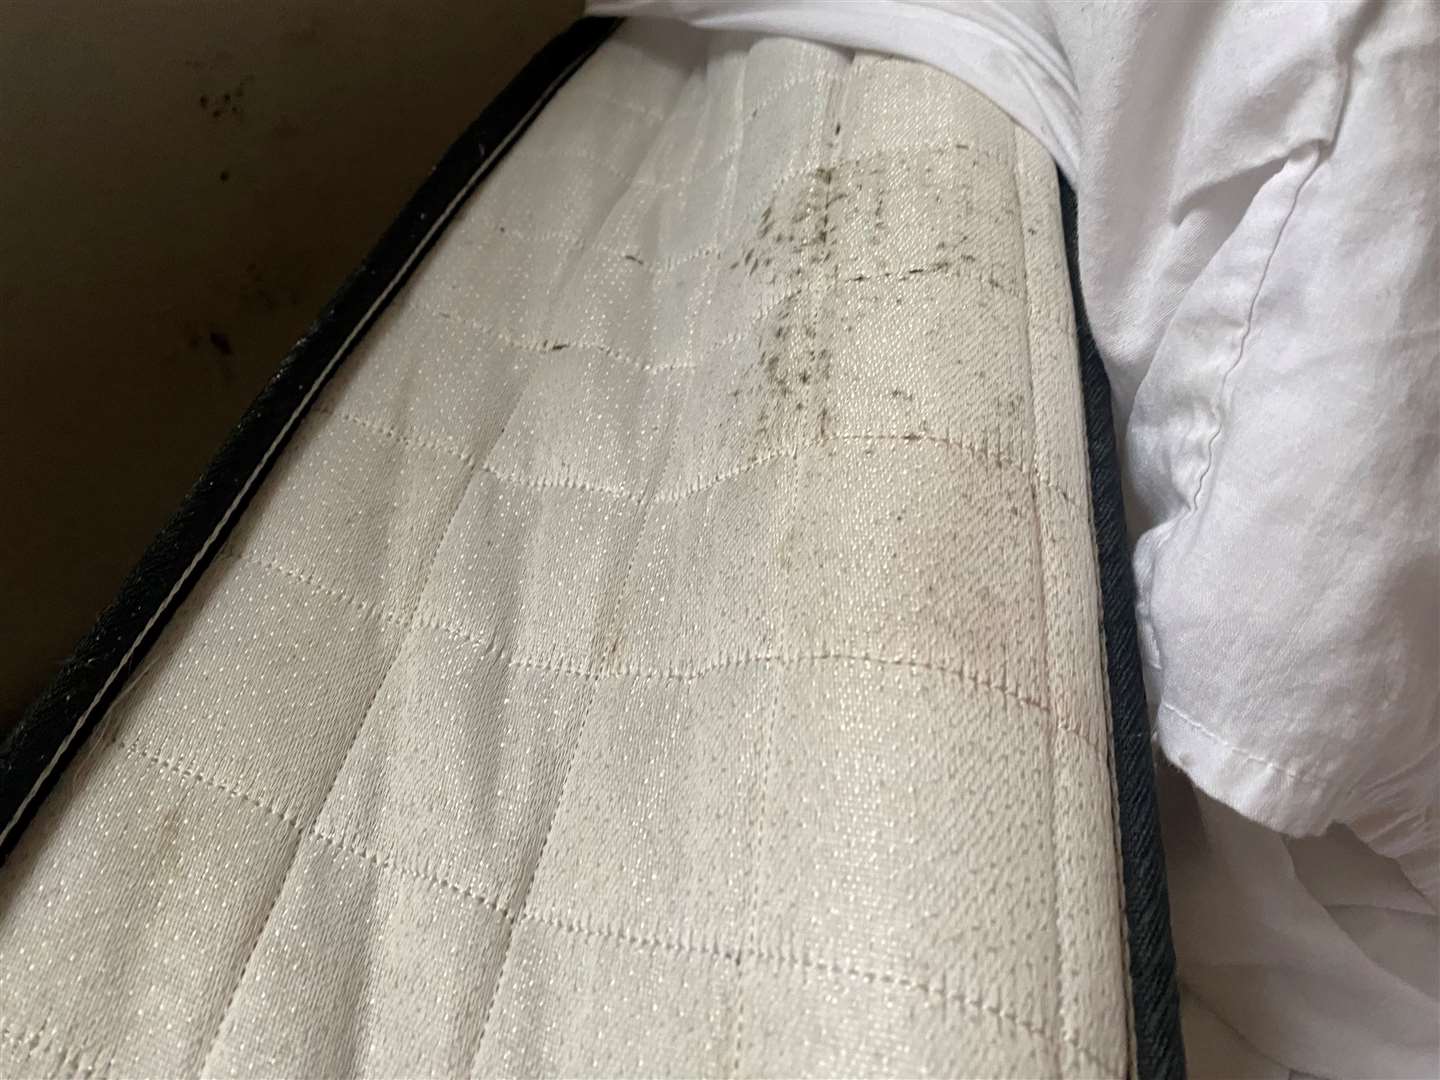 Mould on the mum’s mattress